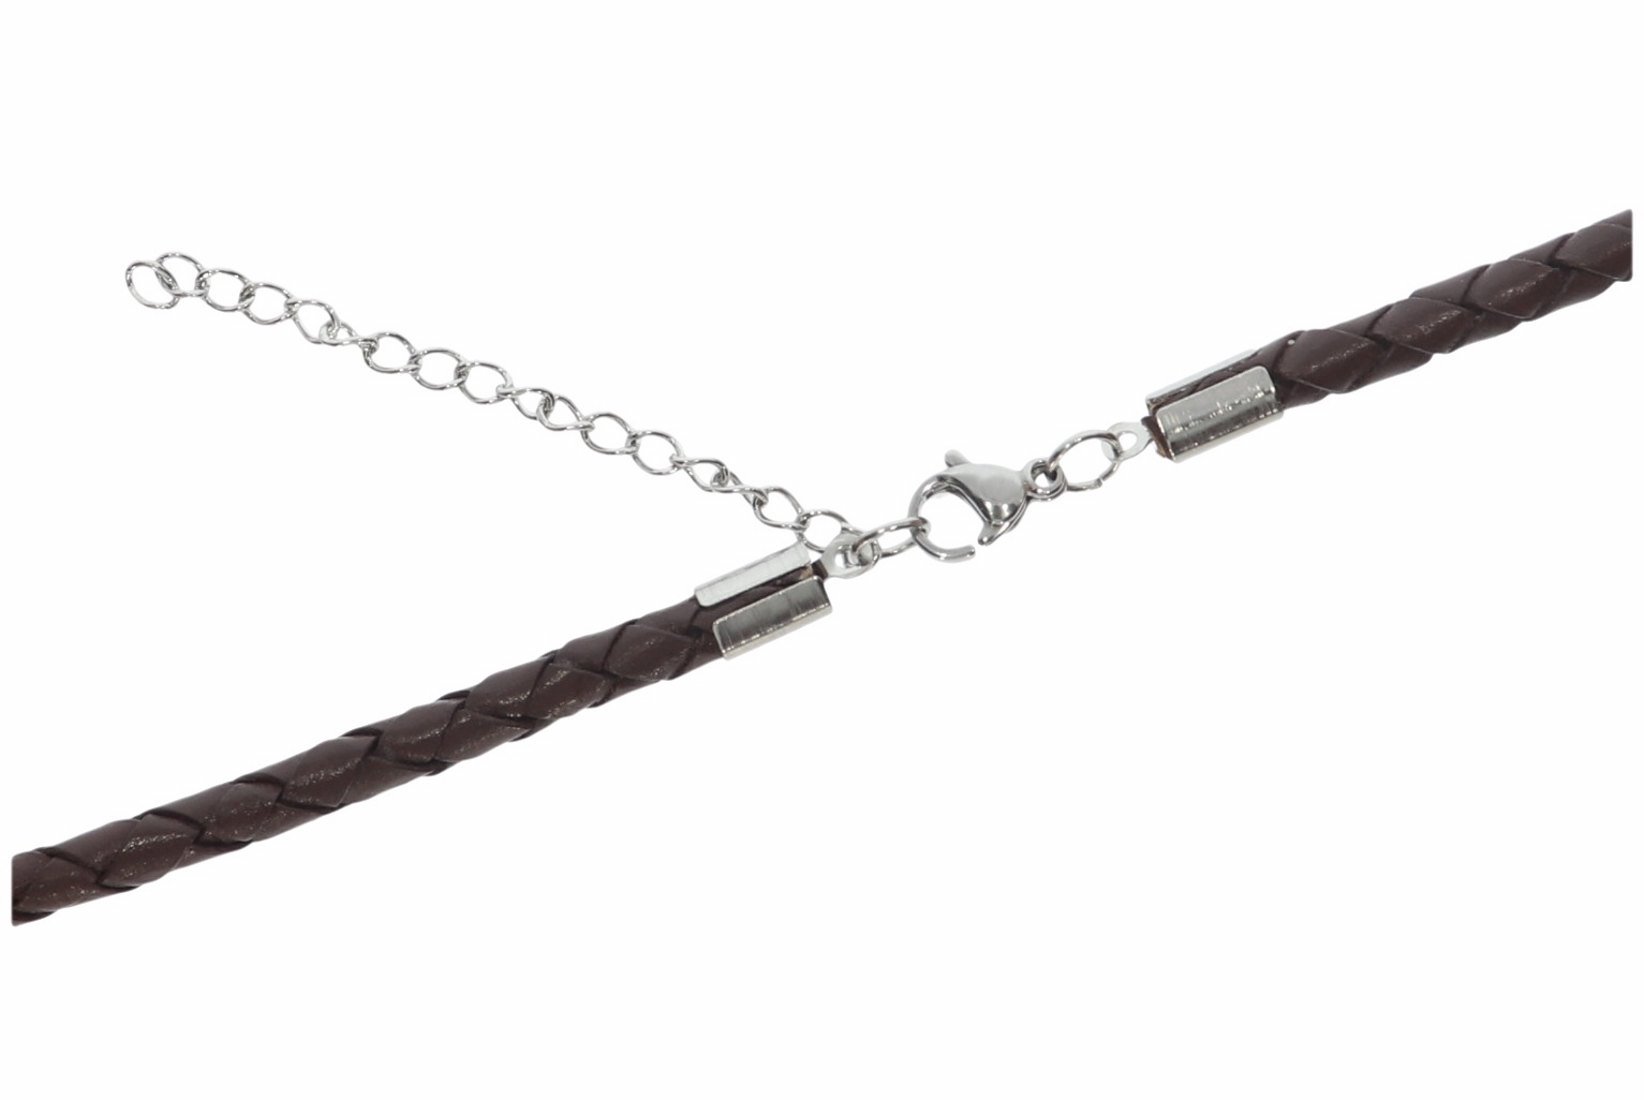 Bola Lederband braun 4mm Halskette & Silber Karabiner Größe 38-100cm - LA02